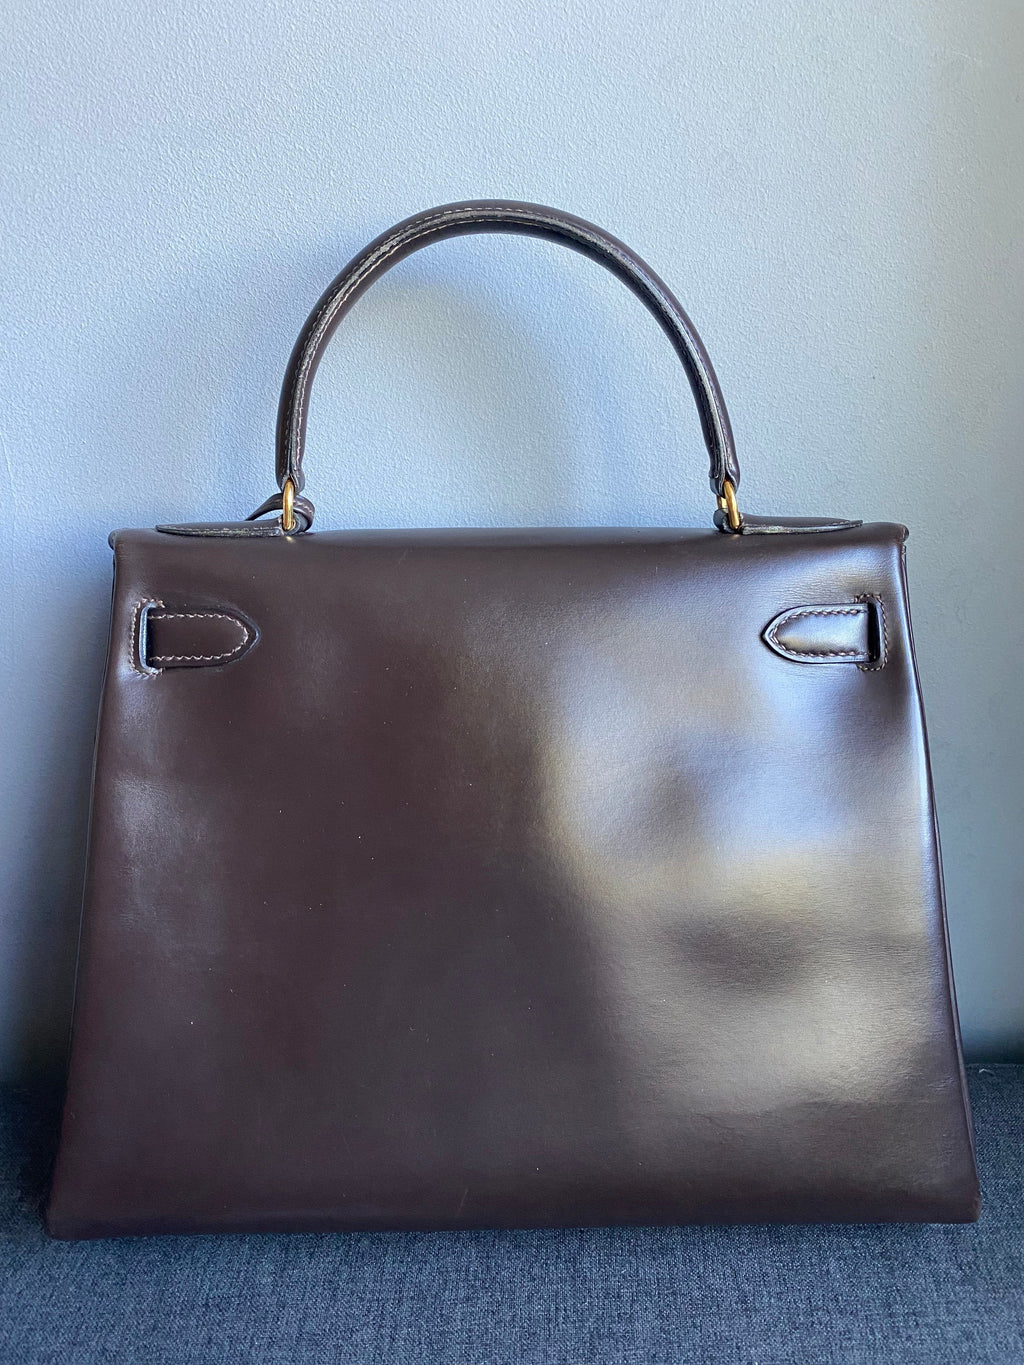 Hermes Kelly 28 Outer-Sewn Crinolan Box Calf Rouge Ash Gold Metal Fittings  〇K Stamped Vintage Handbag 0457